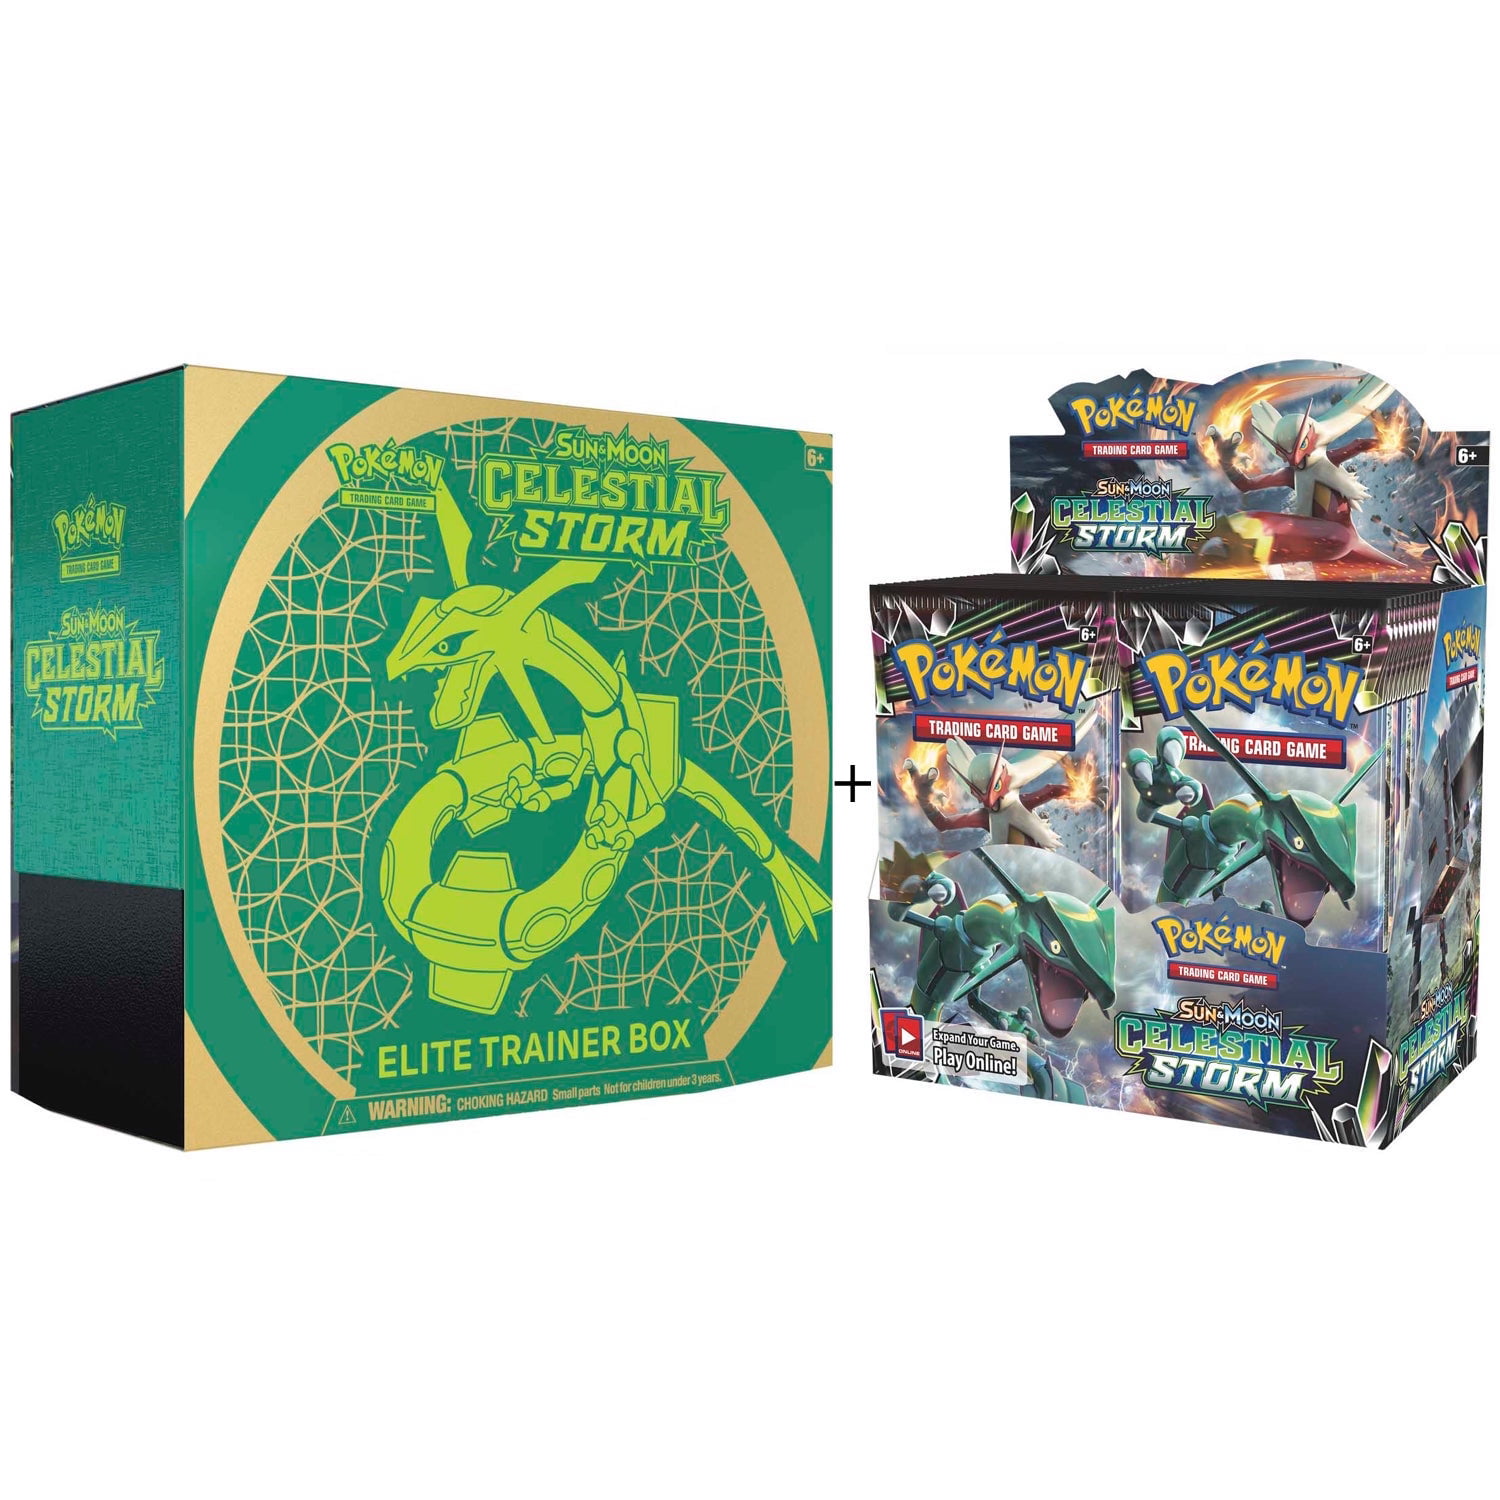 Pokemon TCG: Celestial Storm Box and Storm Elite Trainer box - Walmart.com